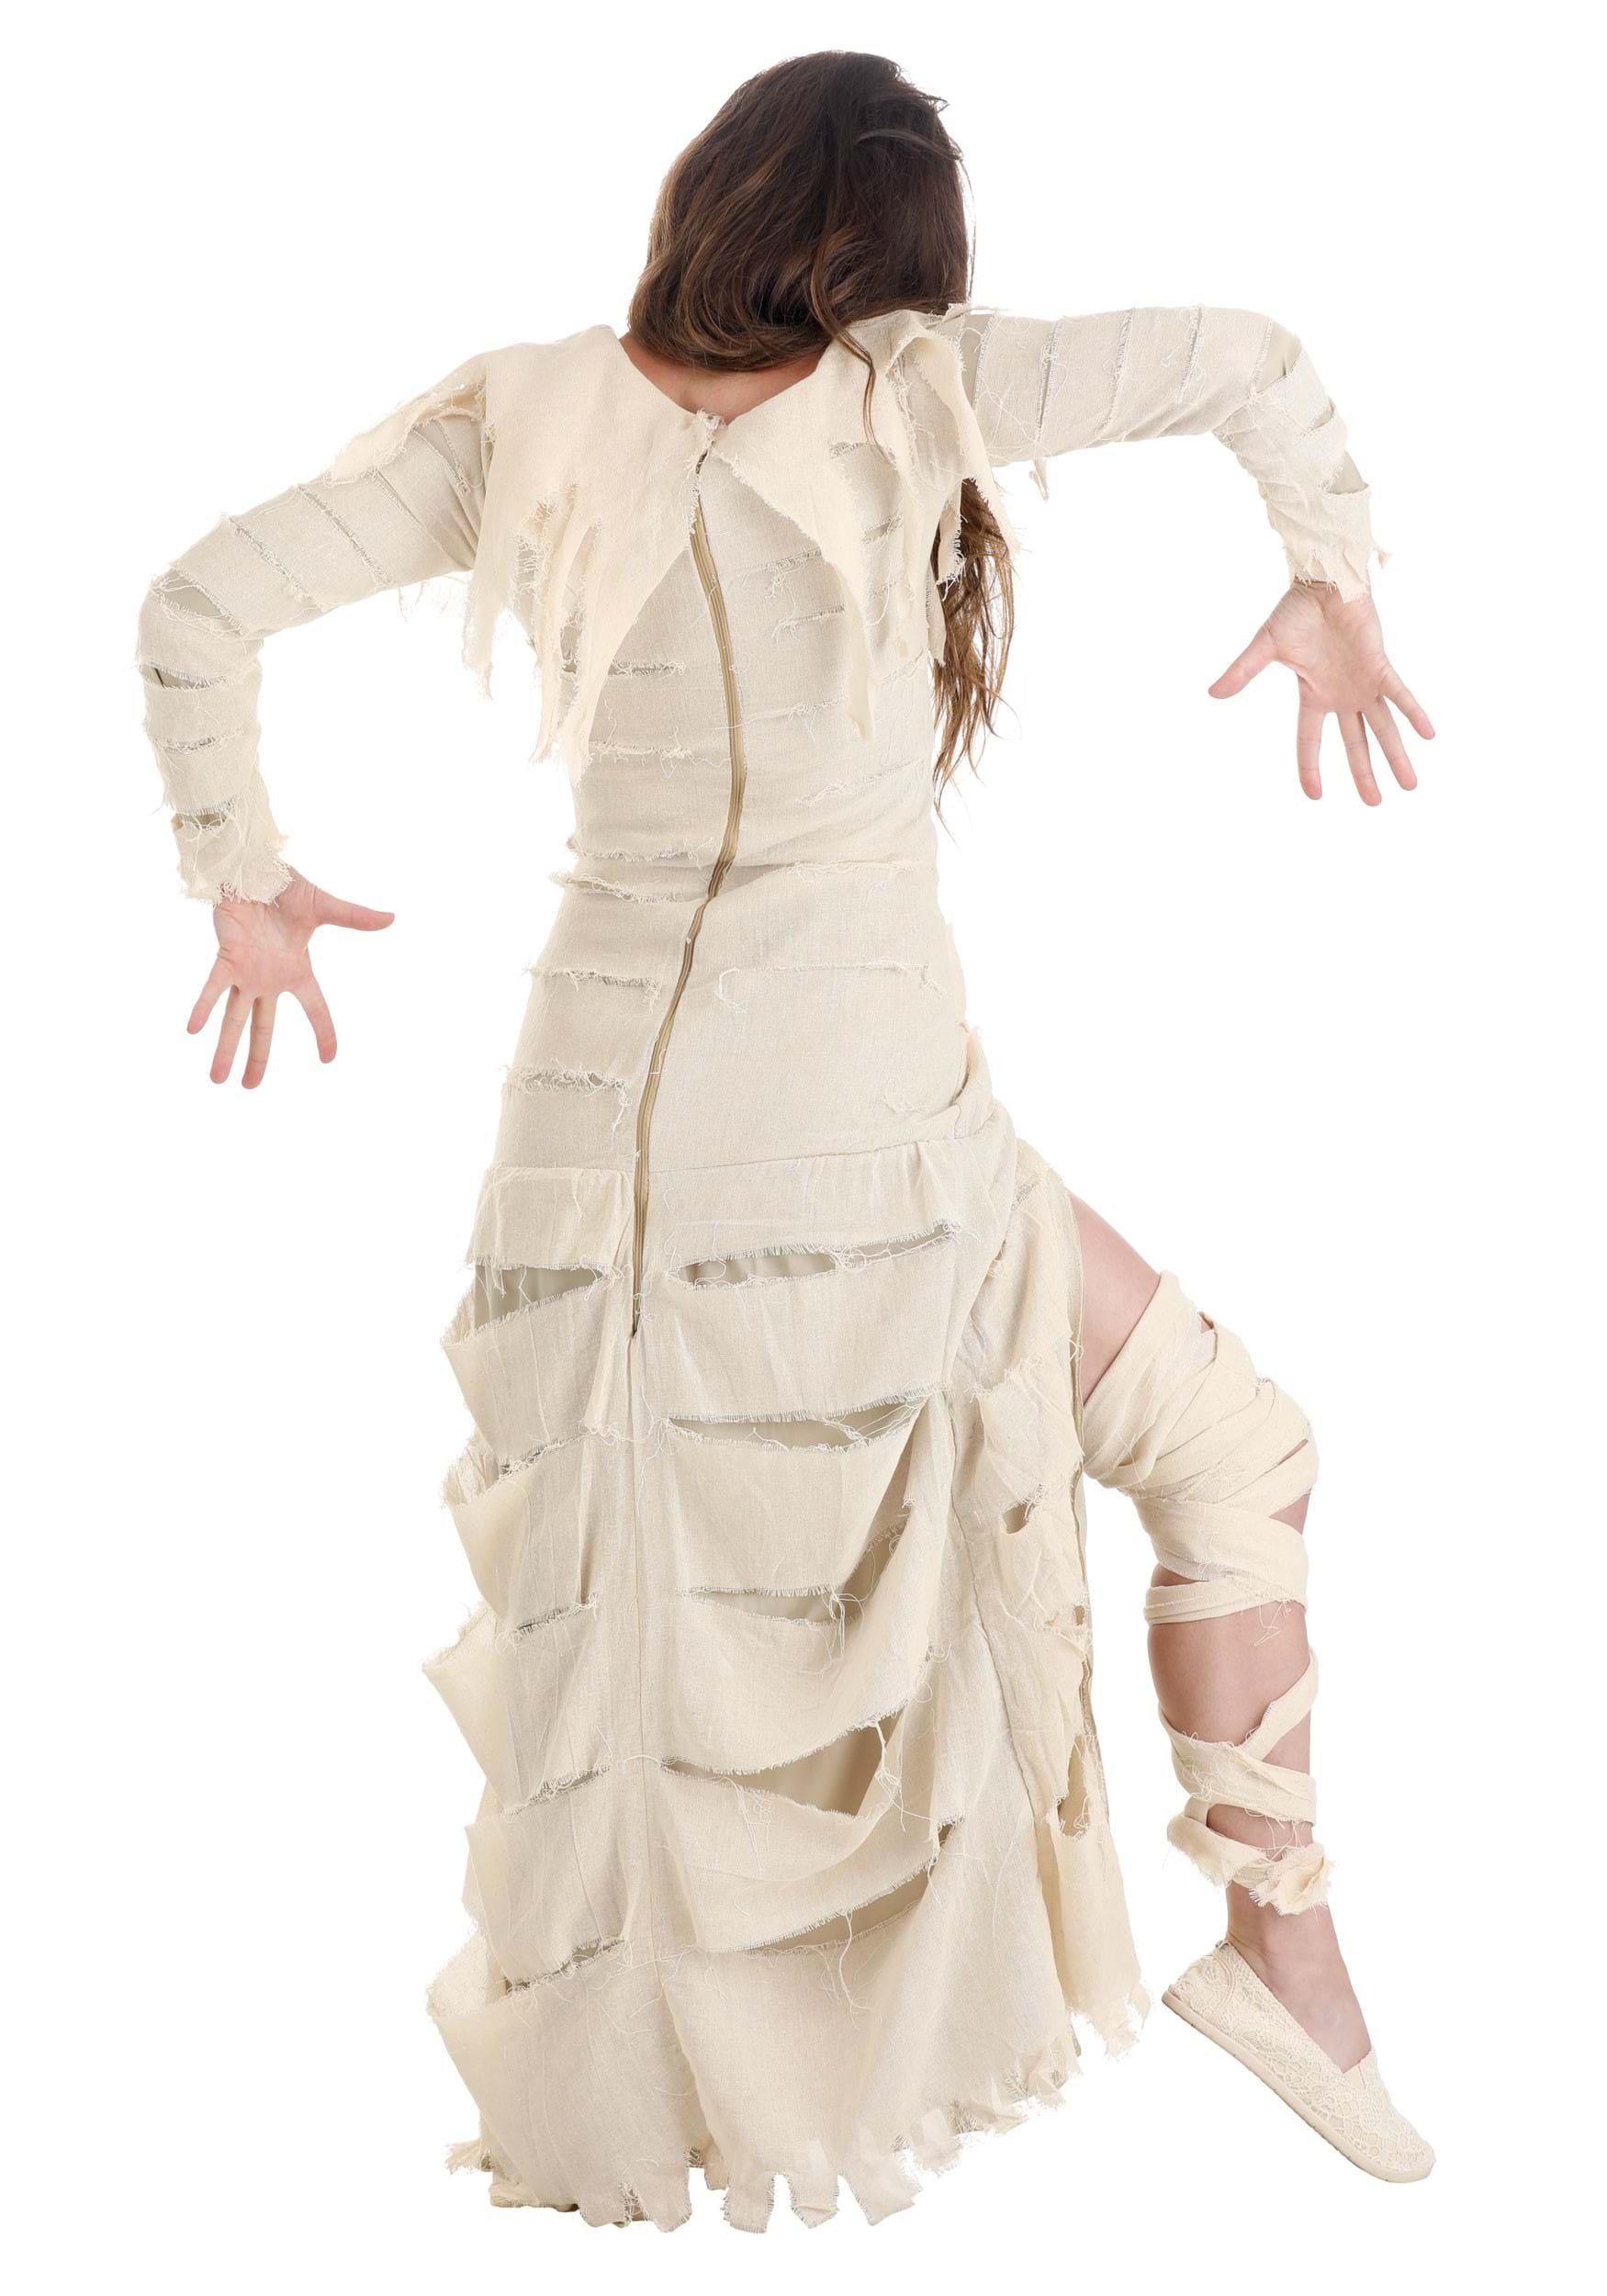 Women's Full Length Mummy Costume